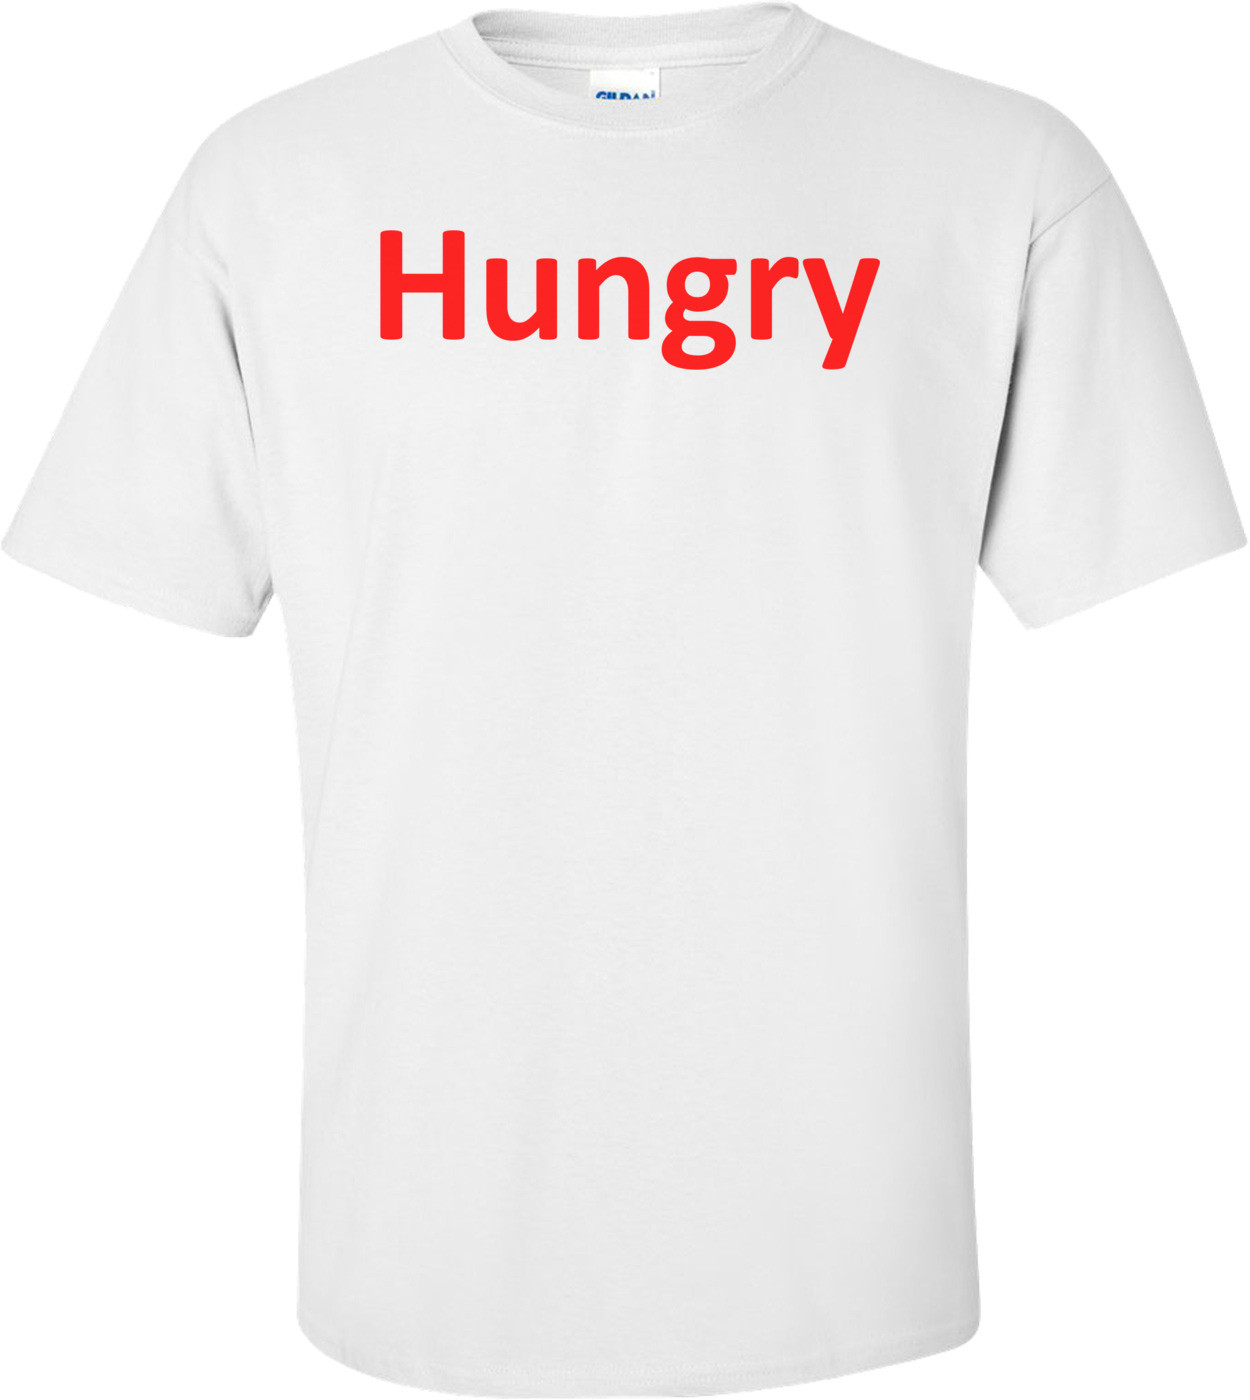 Hungry T-Shirt